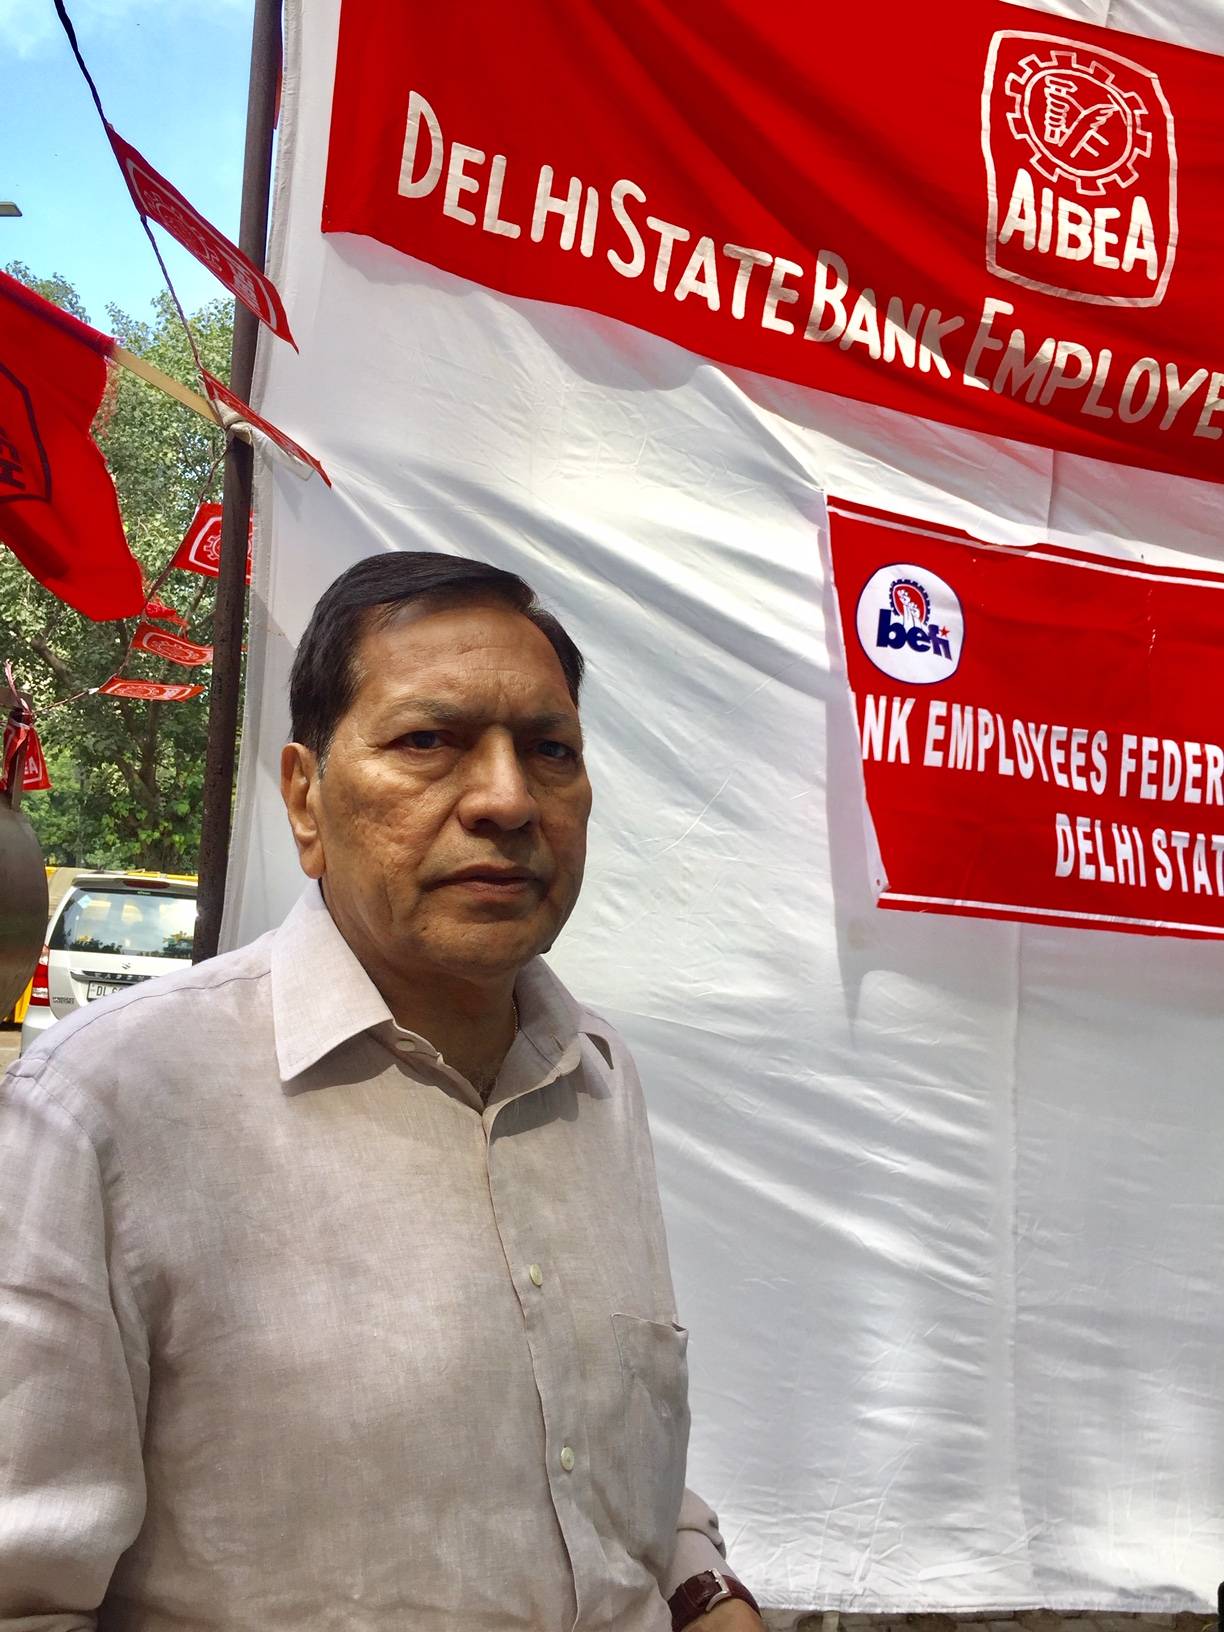 JP Sharma, General Secretary, Delhi State, AIBEA